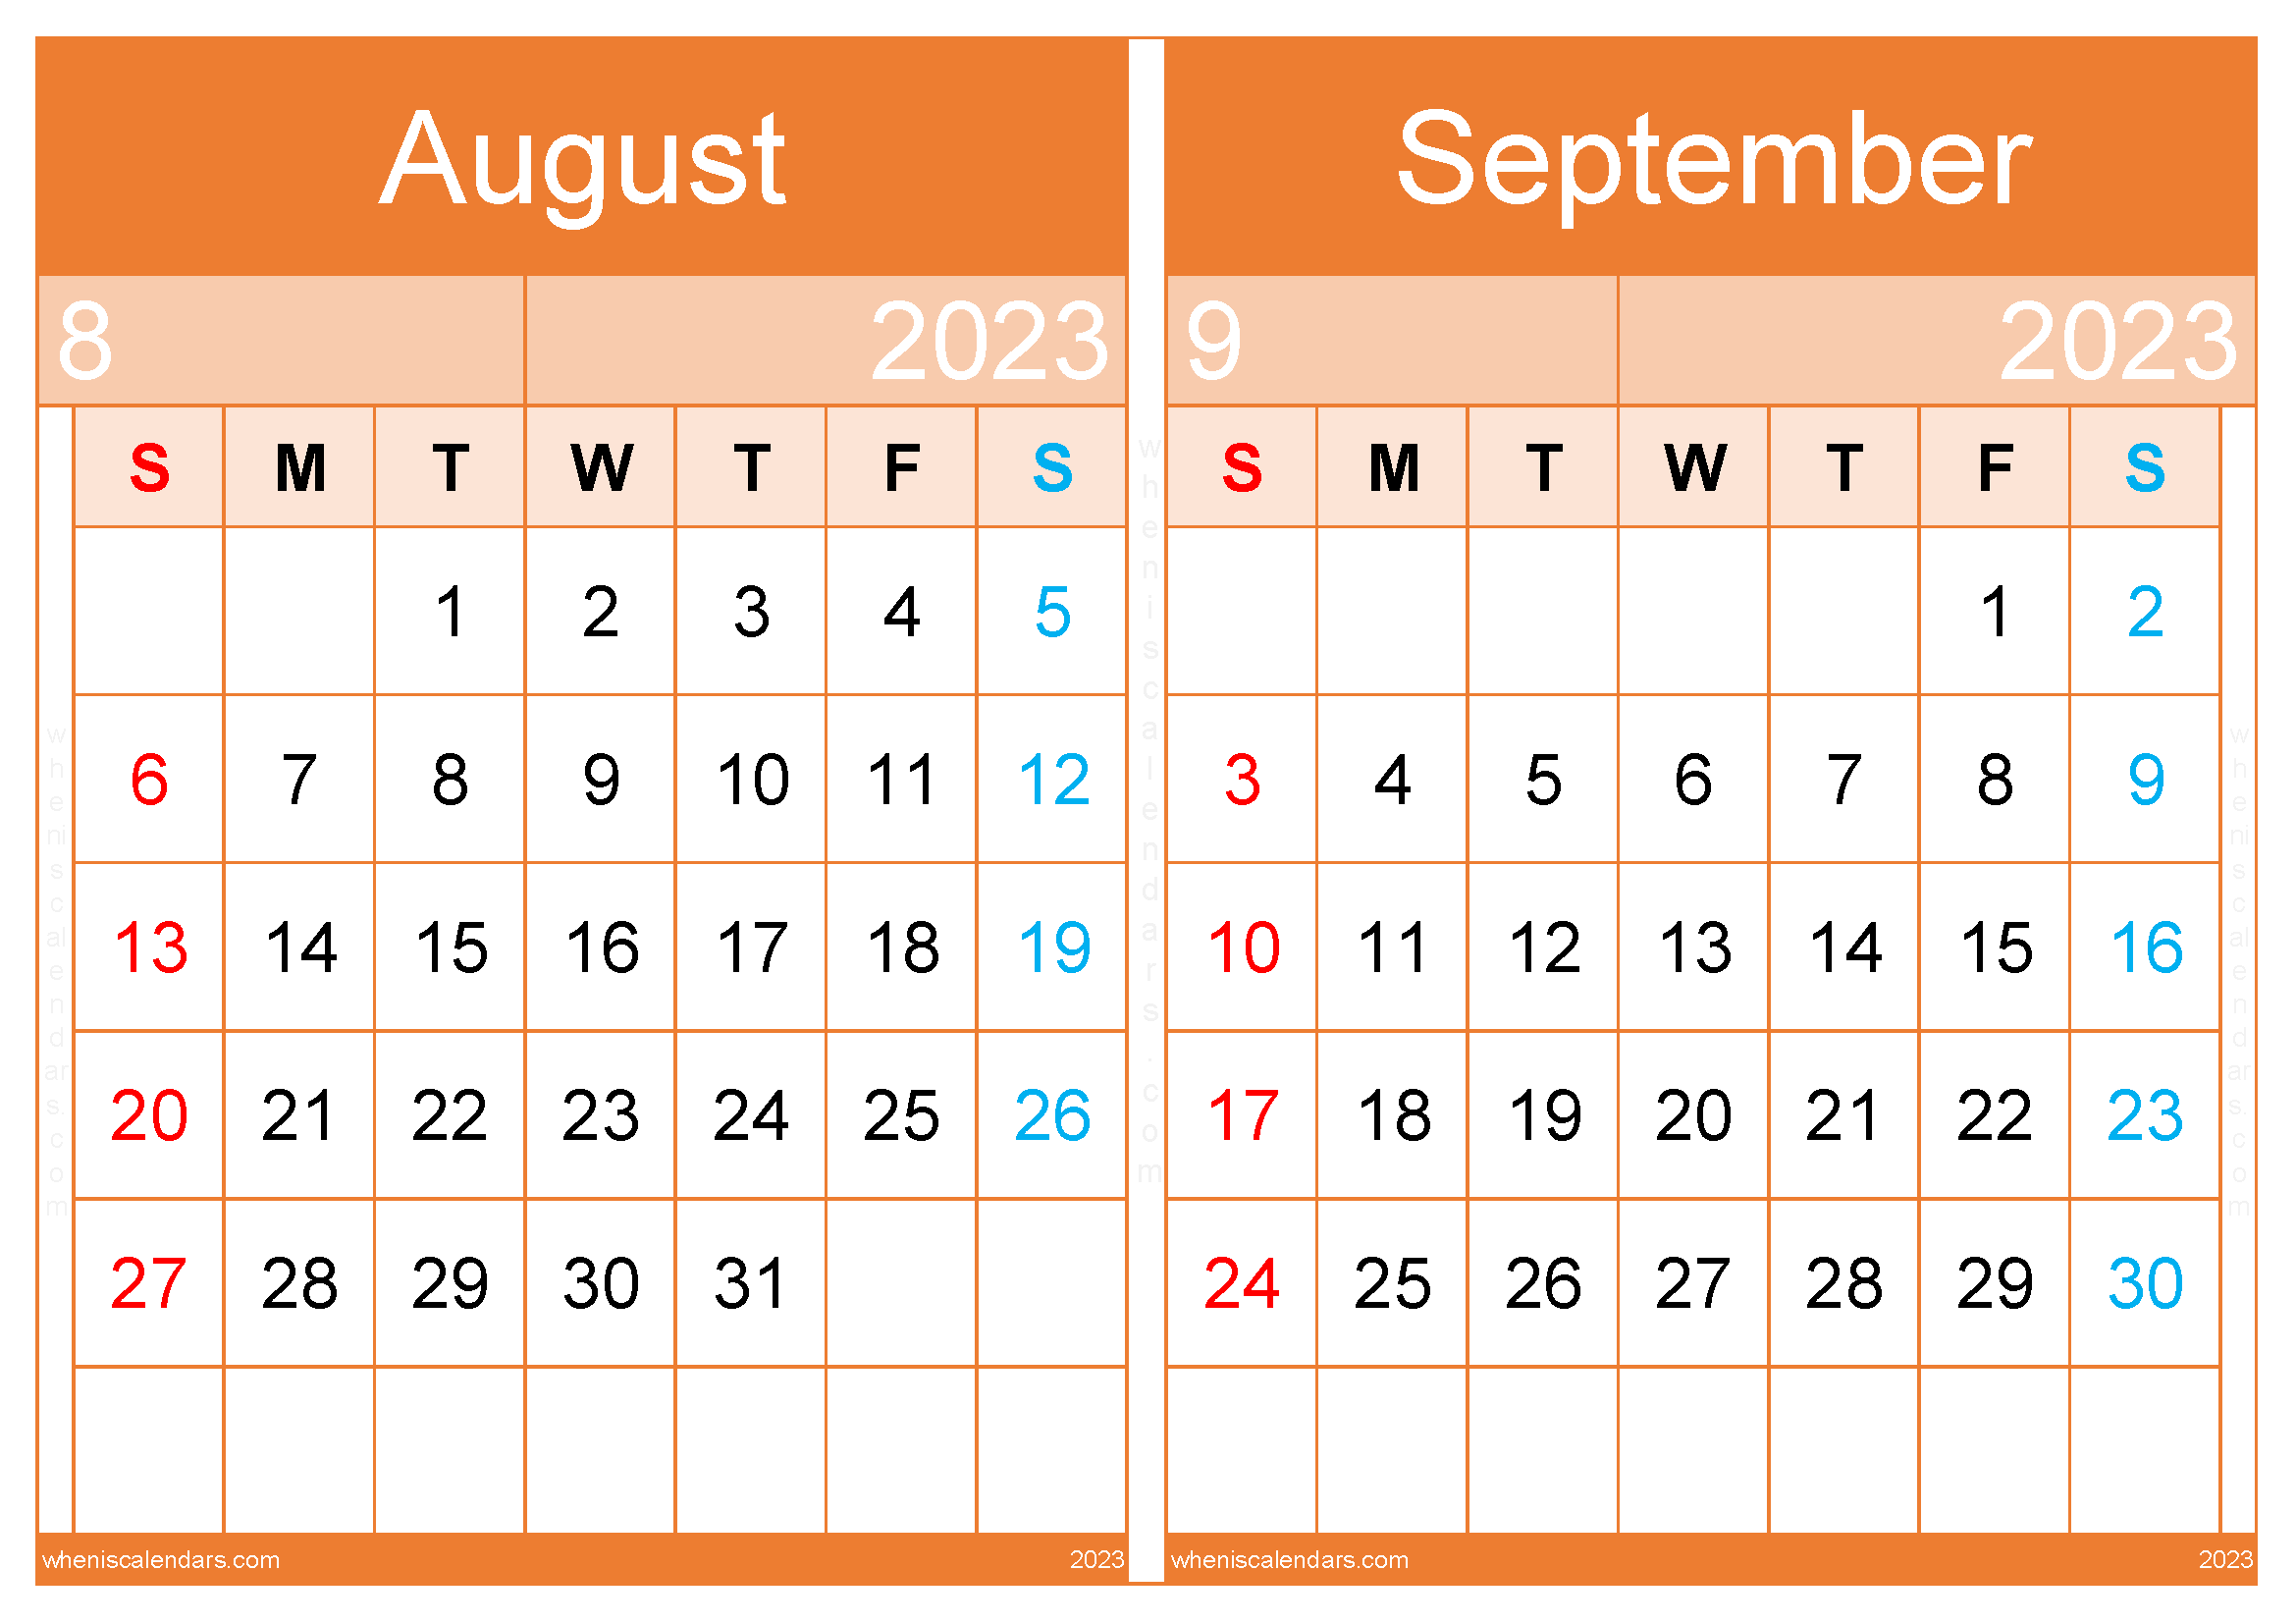 Calendar August and September 2023 Template (AS2312)